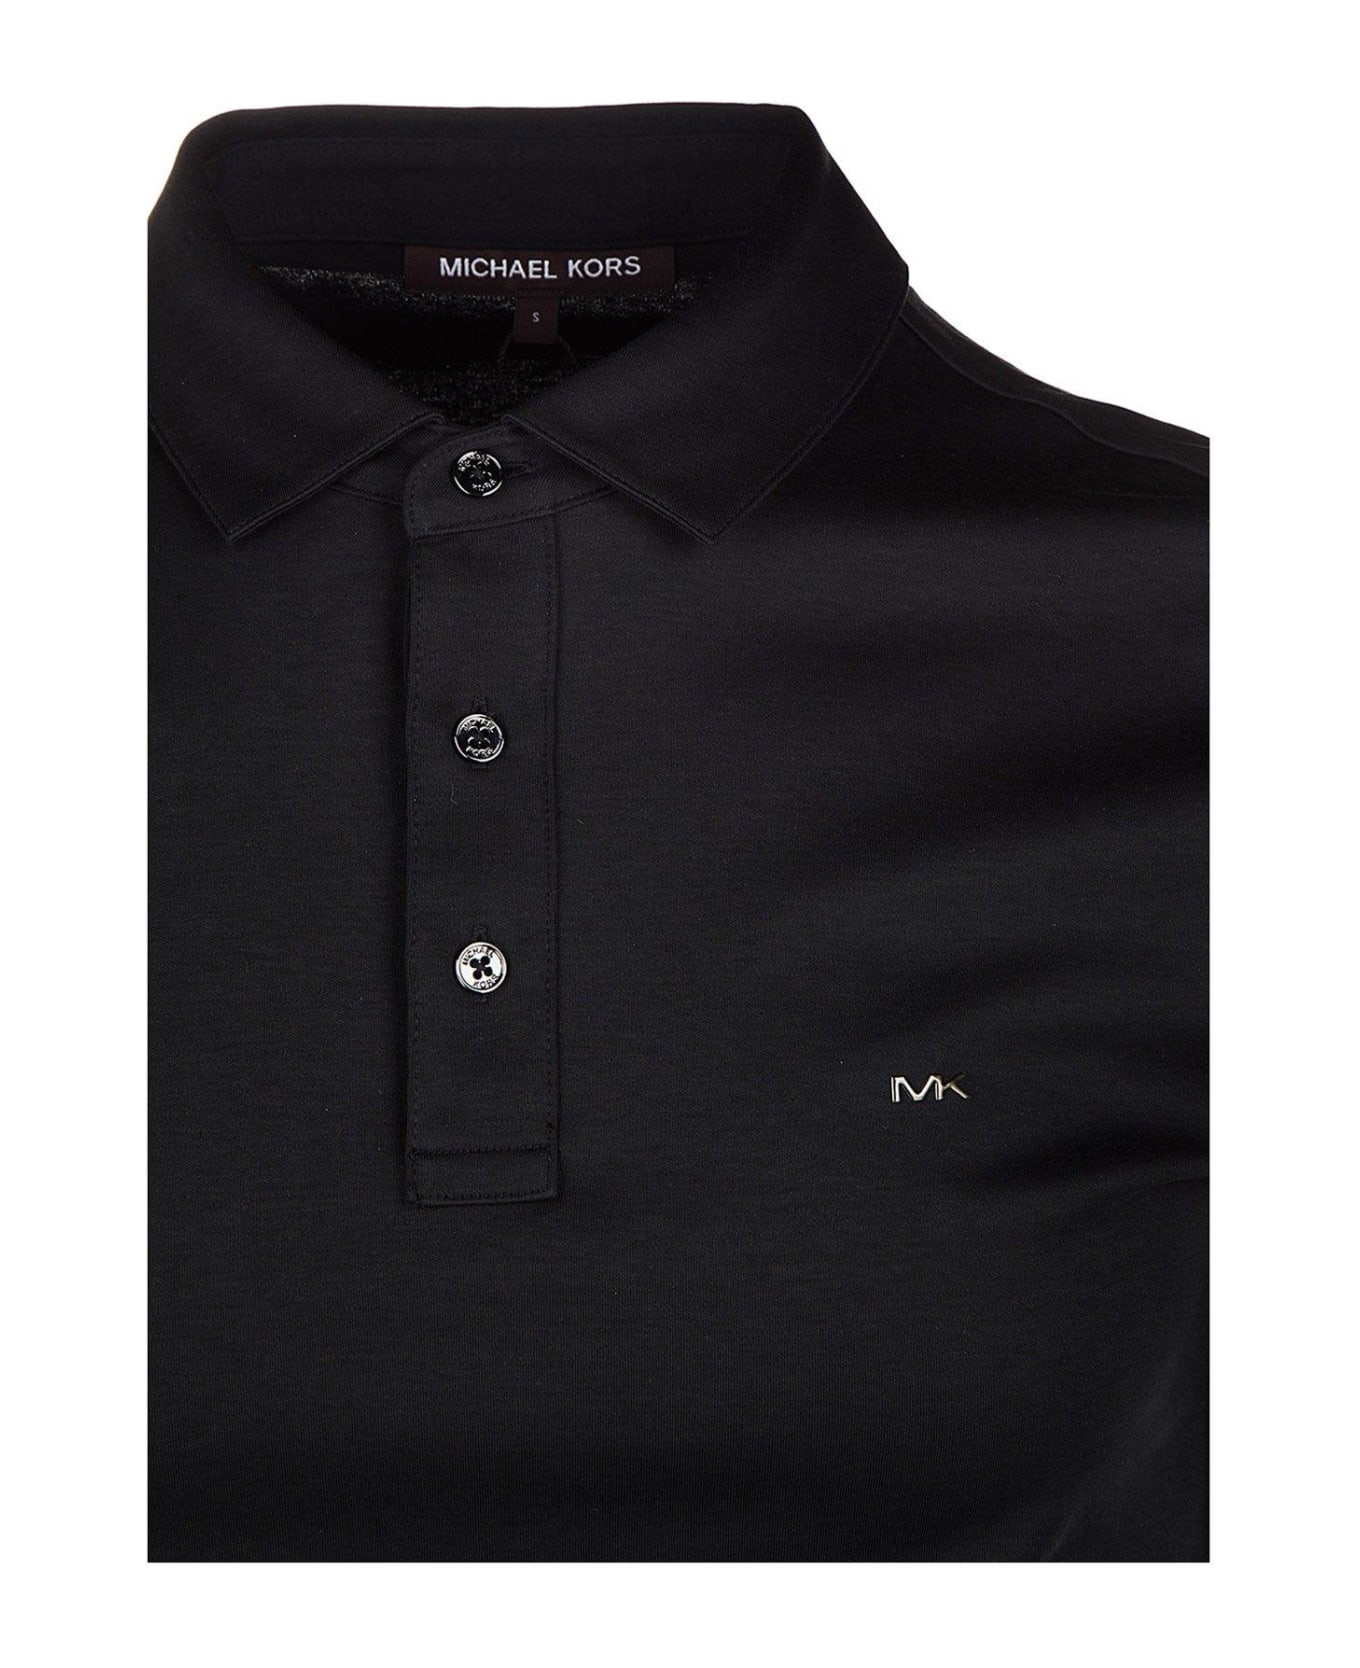 Michael Kors Sleek Polo Shirt - Black